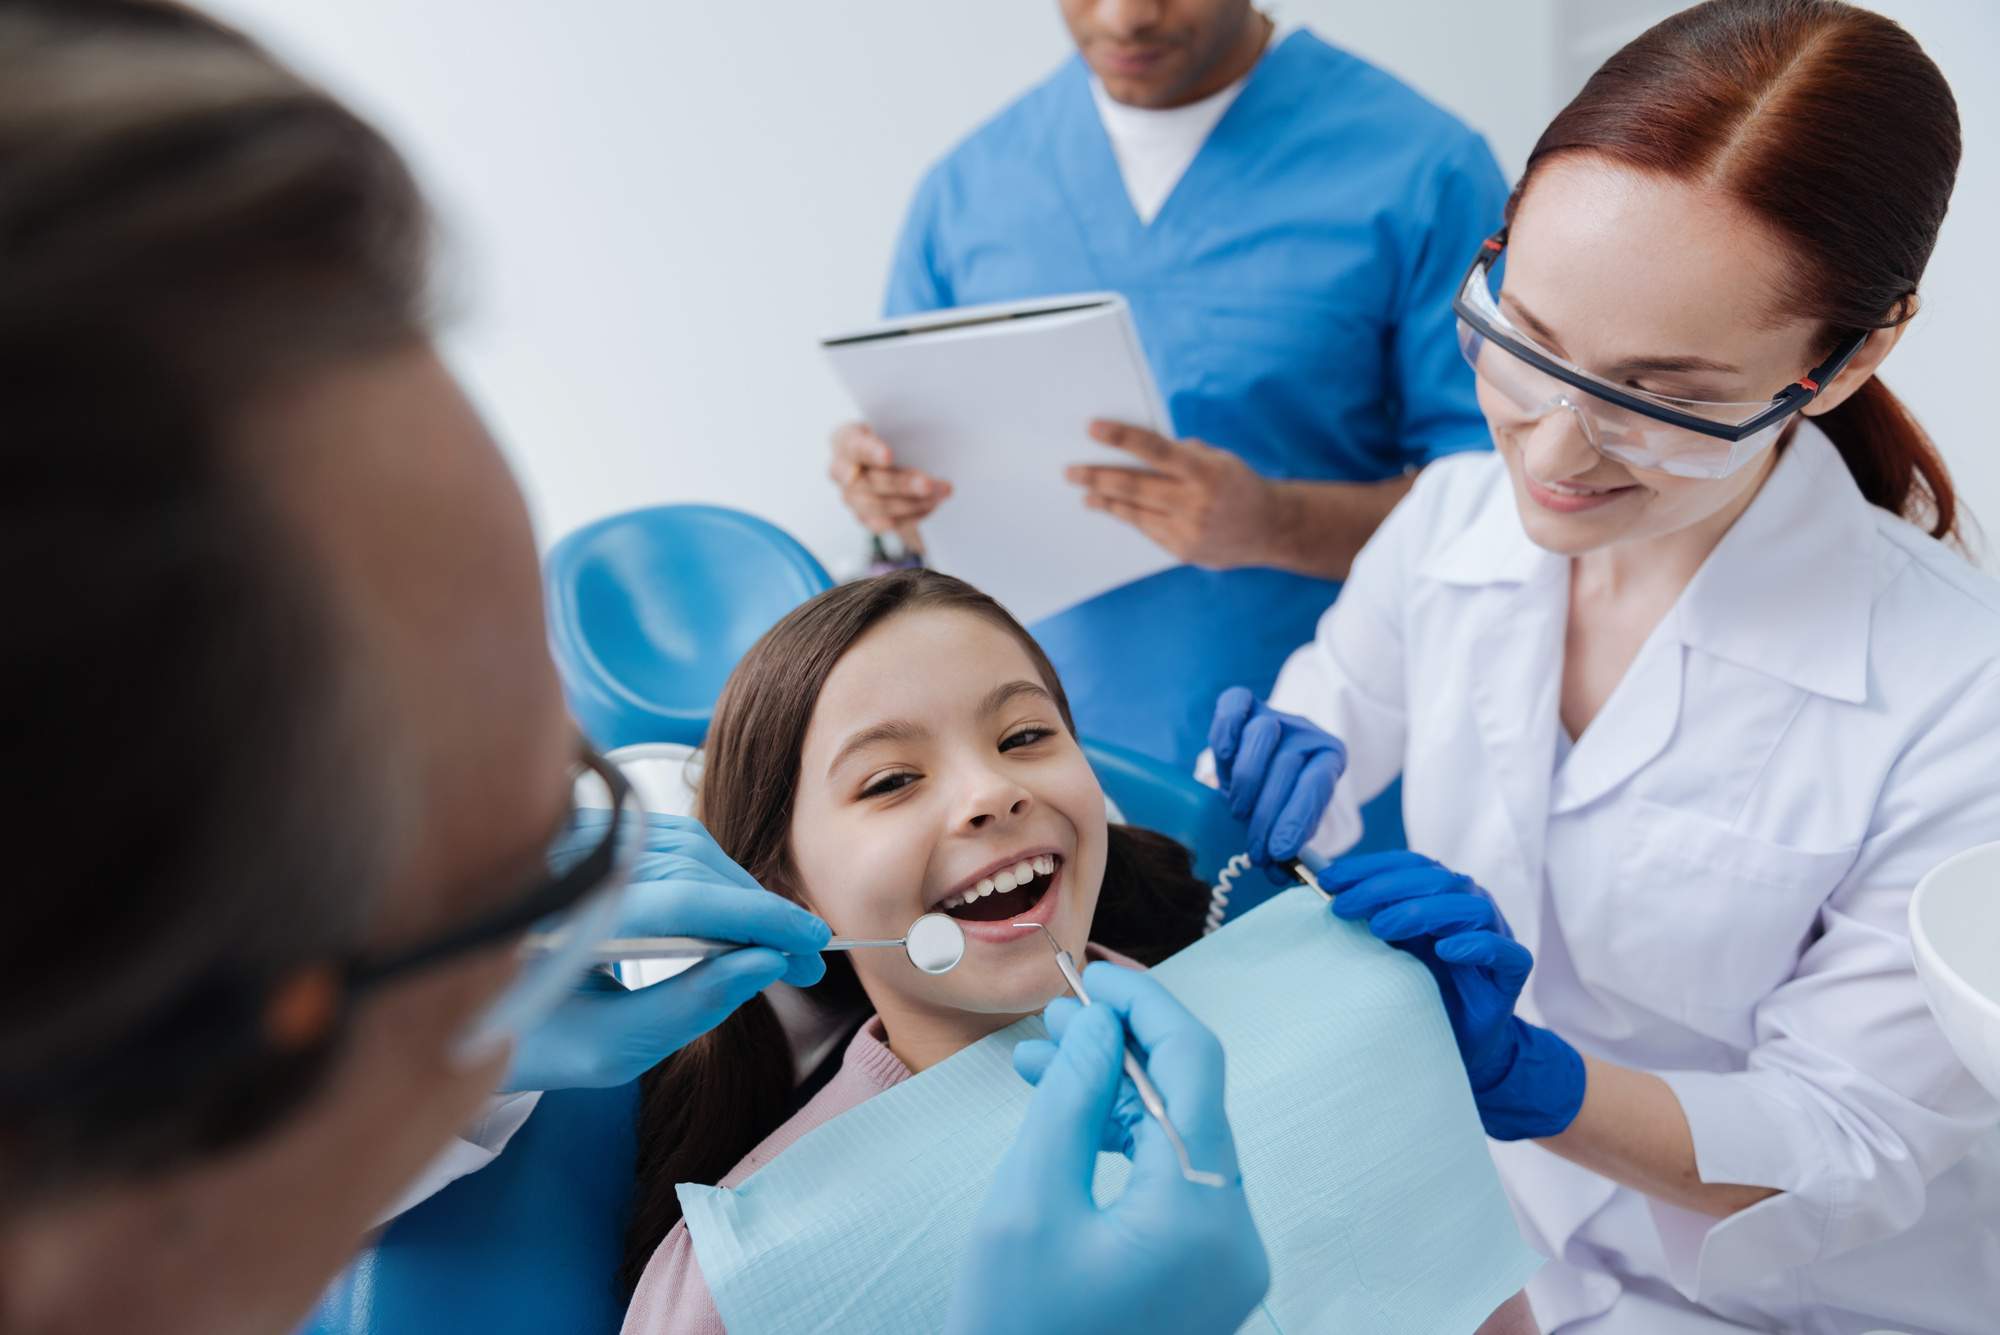 5 Key Marketing Tips for Dentists